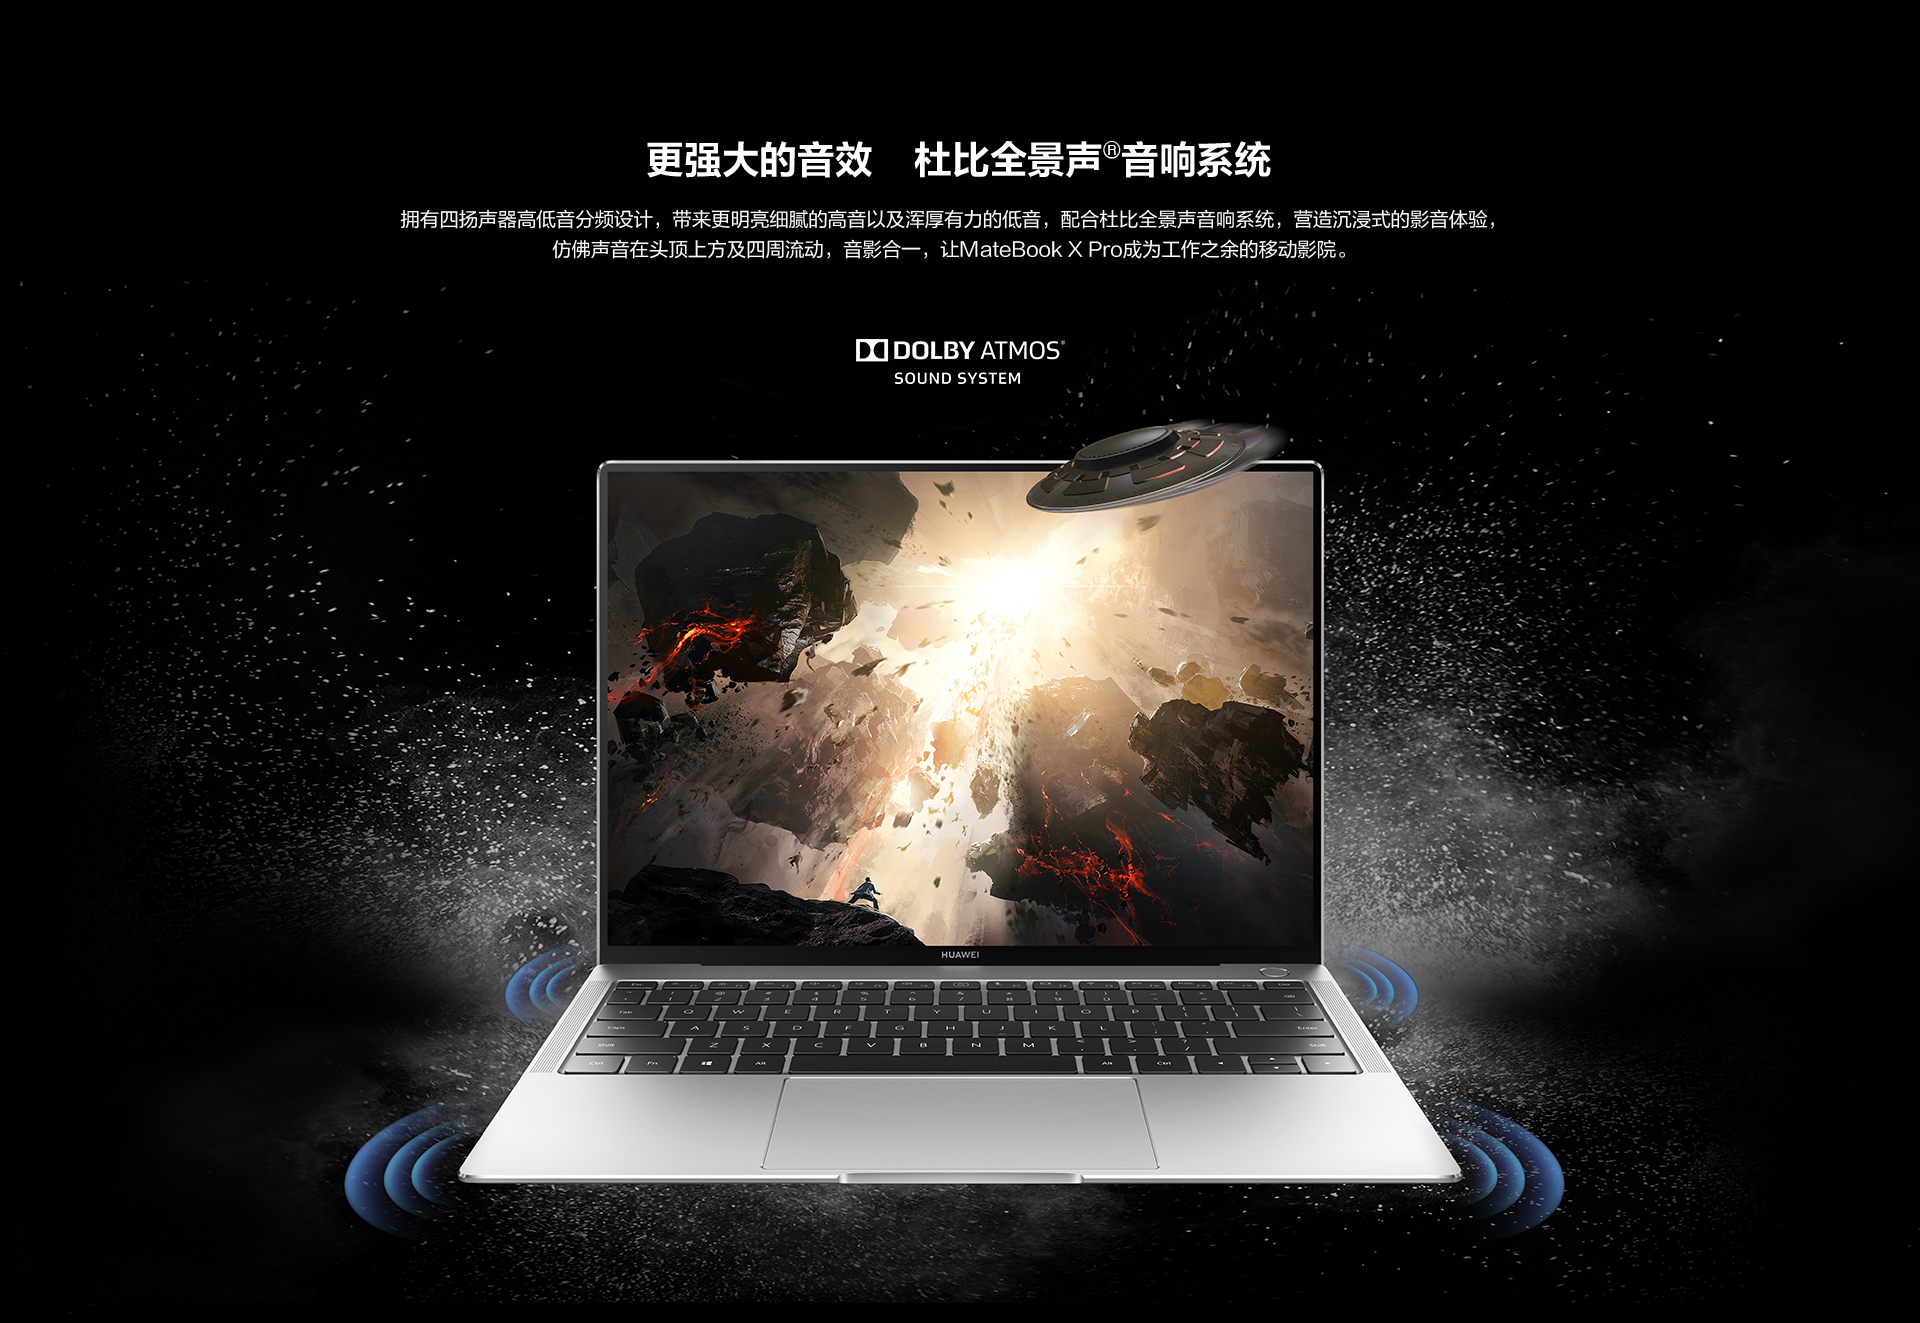 Huawei MateBook X Pro 2019 audio